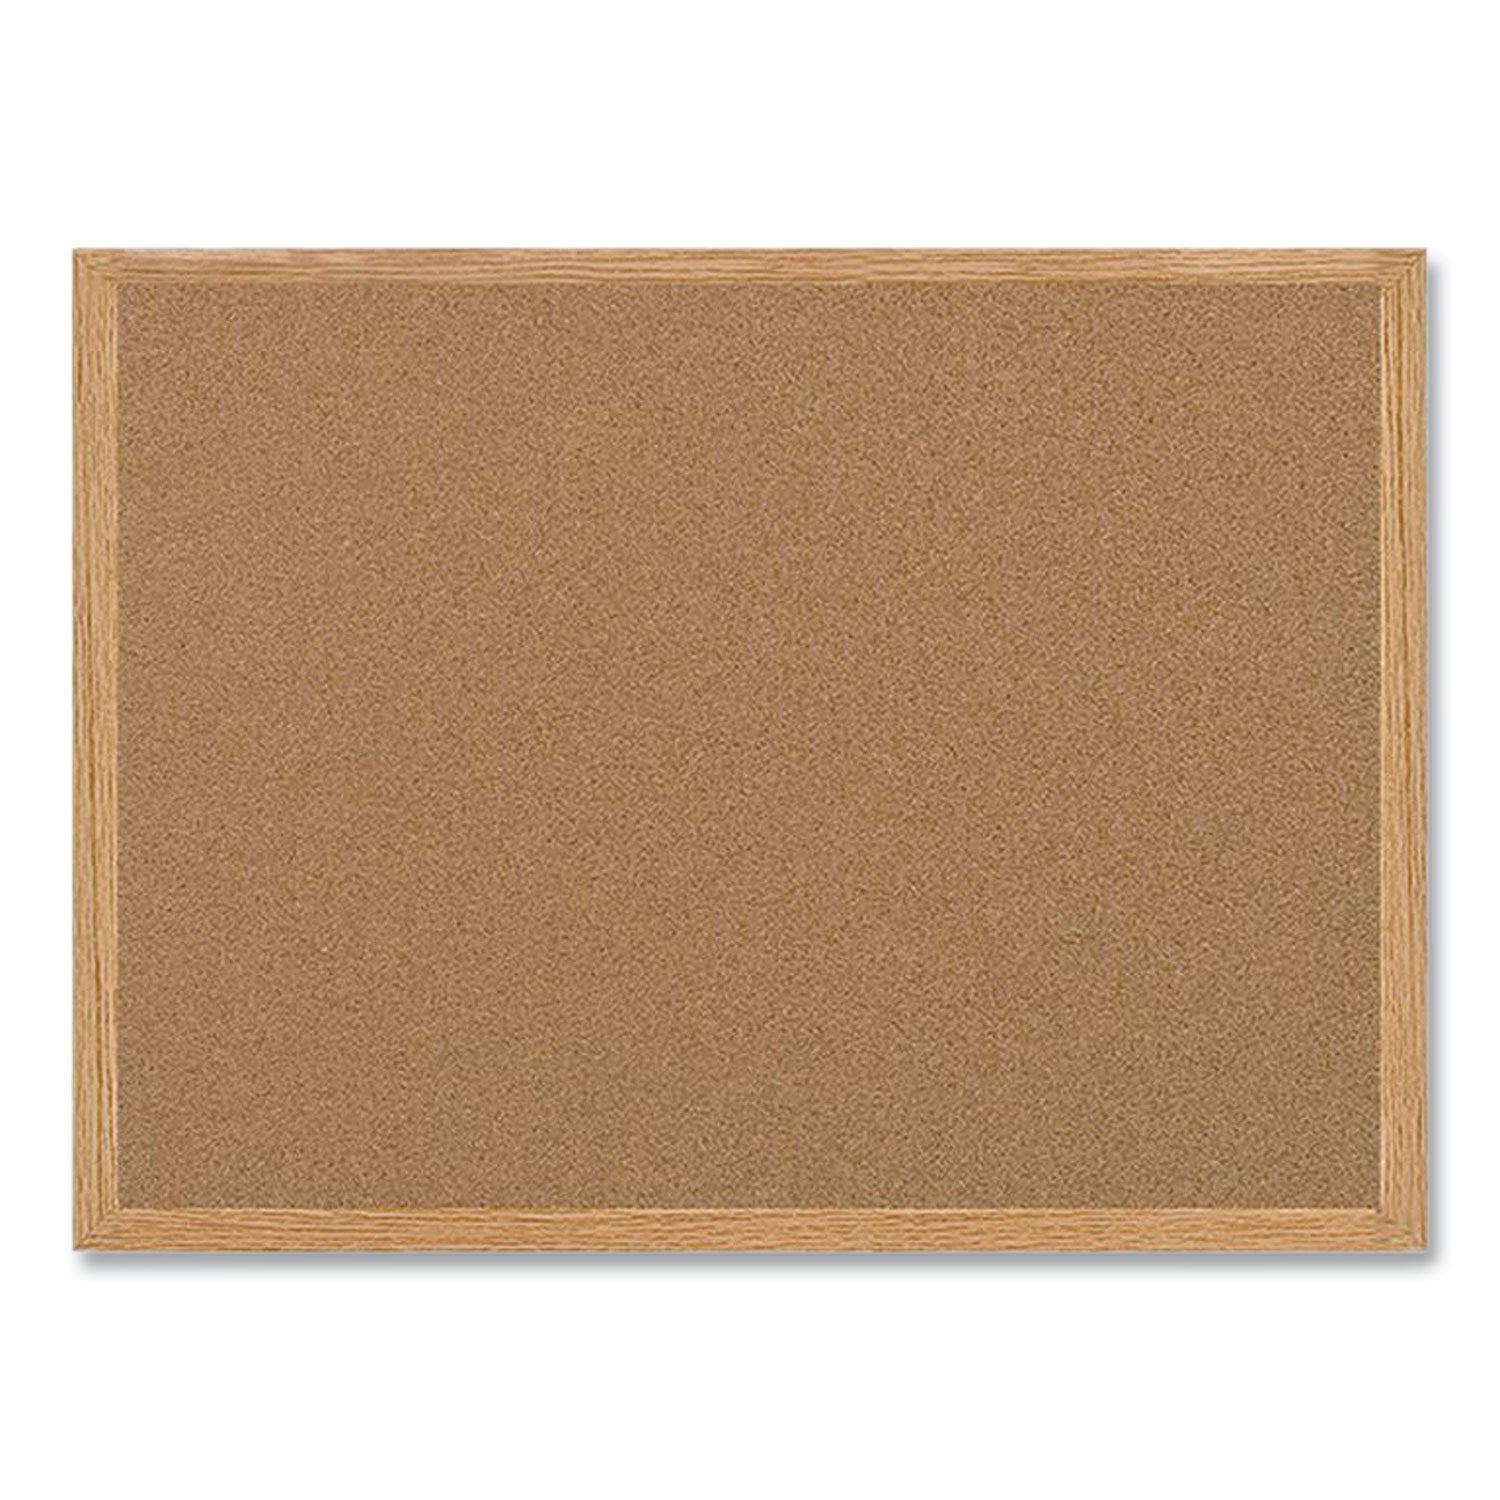 Earth Cork Board, 48 x 36, Tan Surface, Oak Wood Frame - 1